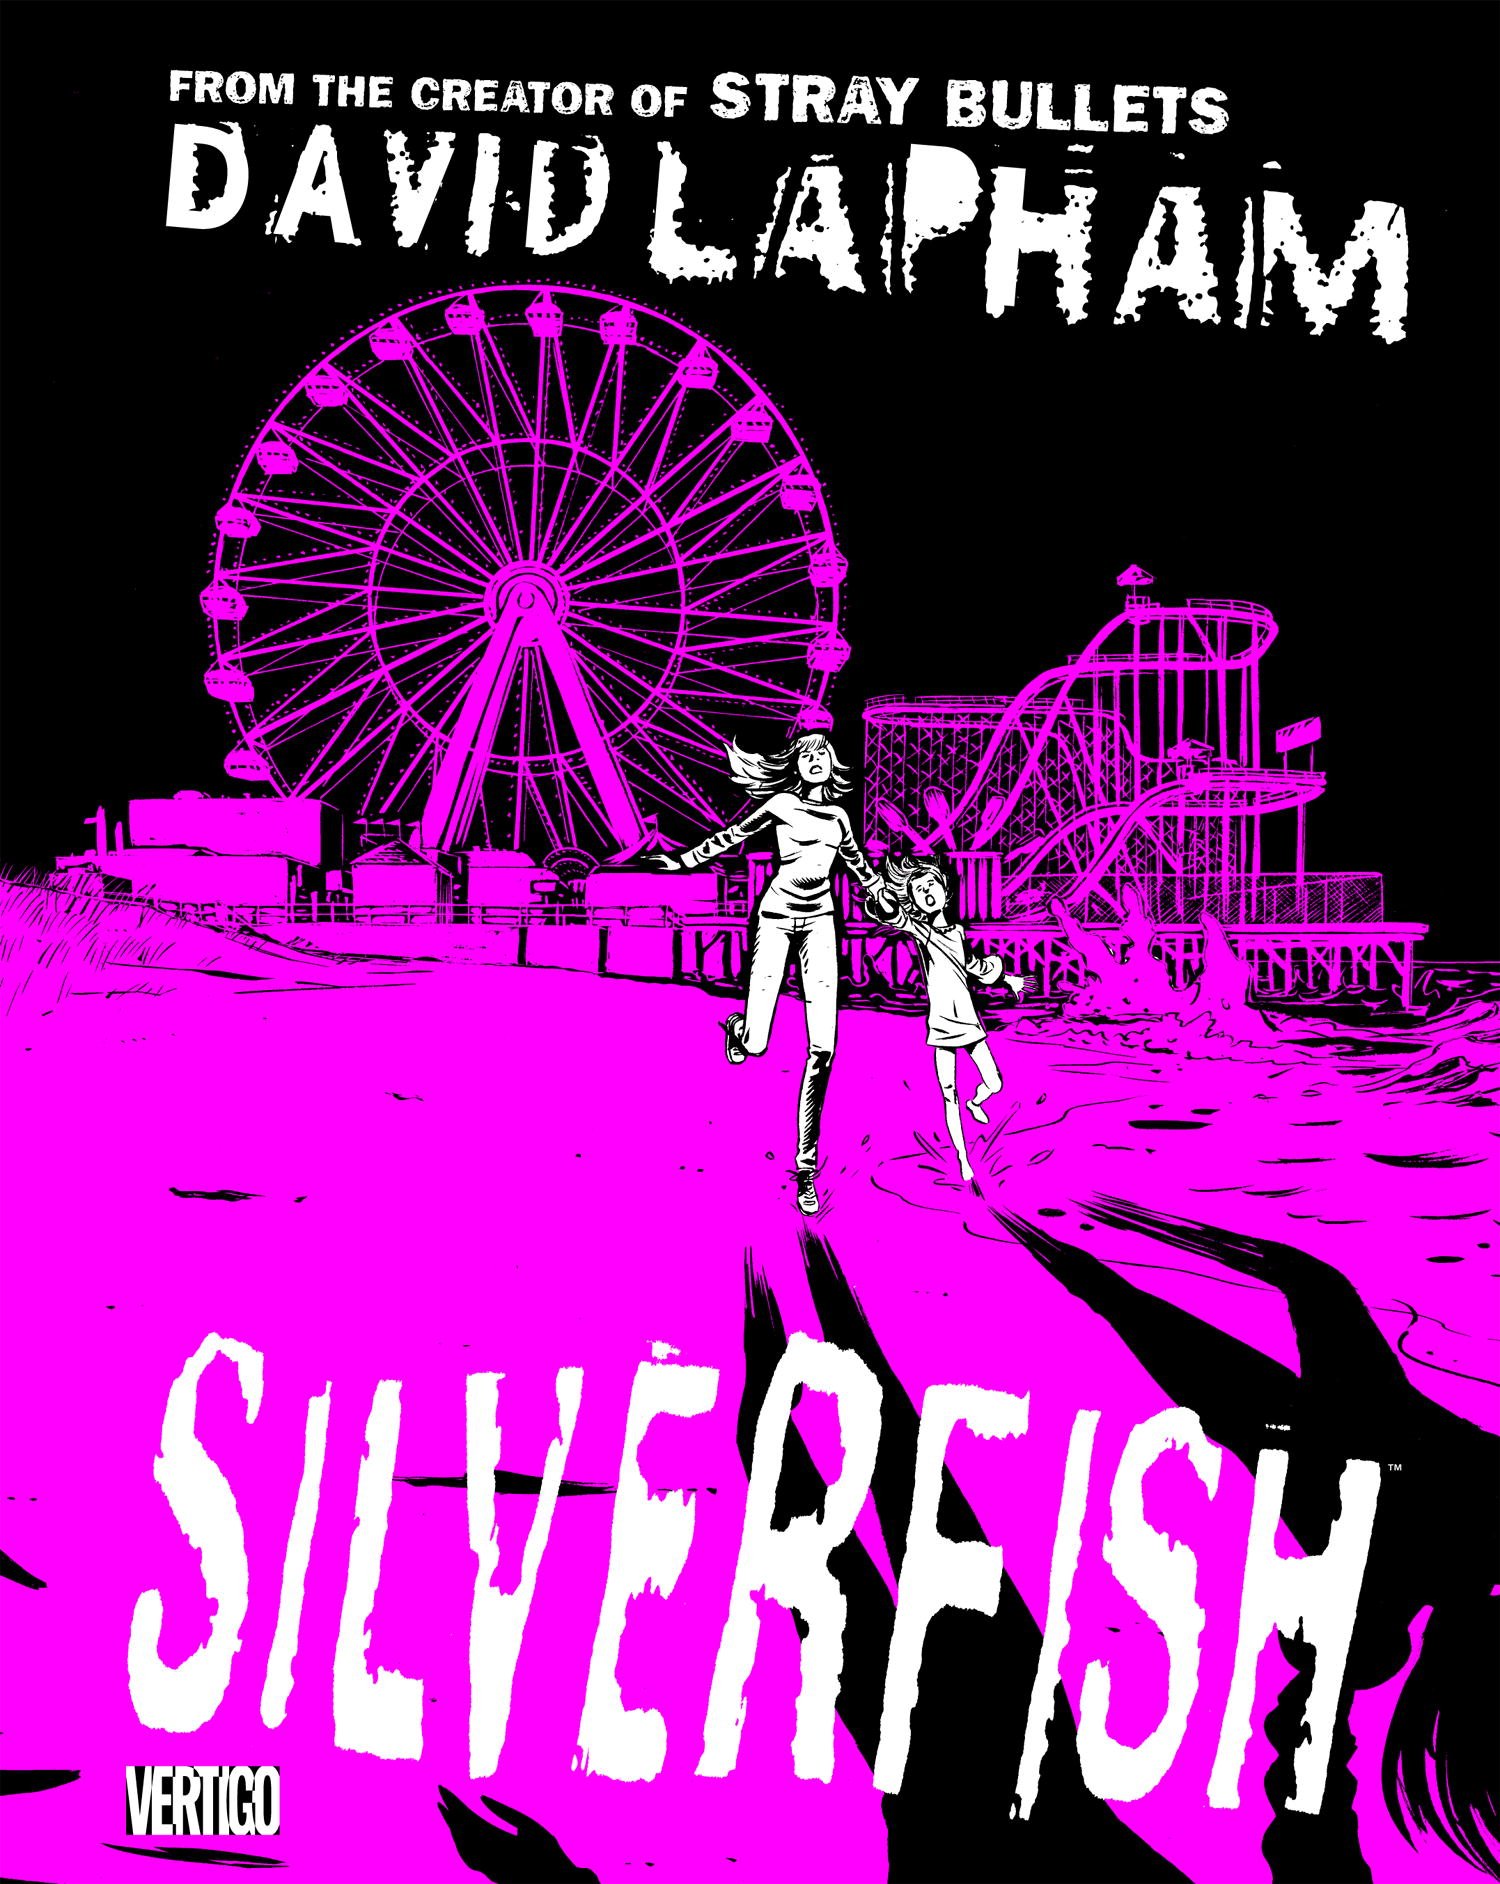 Silverfish Hardcover